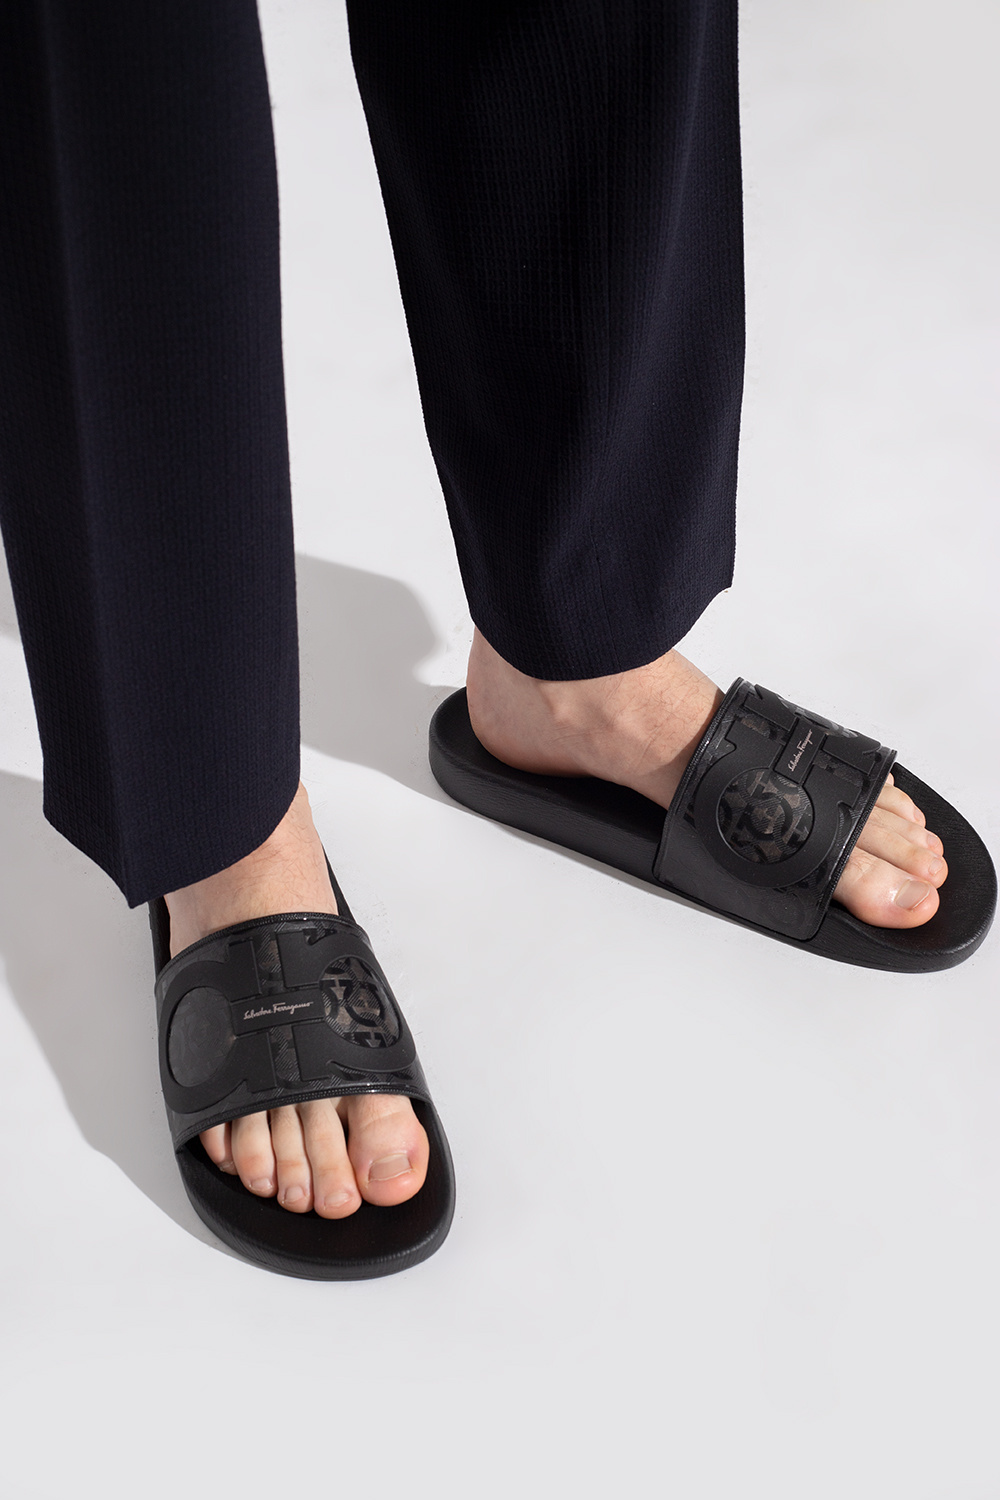 Salvatore Ferragamo Groove Black/ Gold slides sandals Men’s Size 9 M